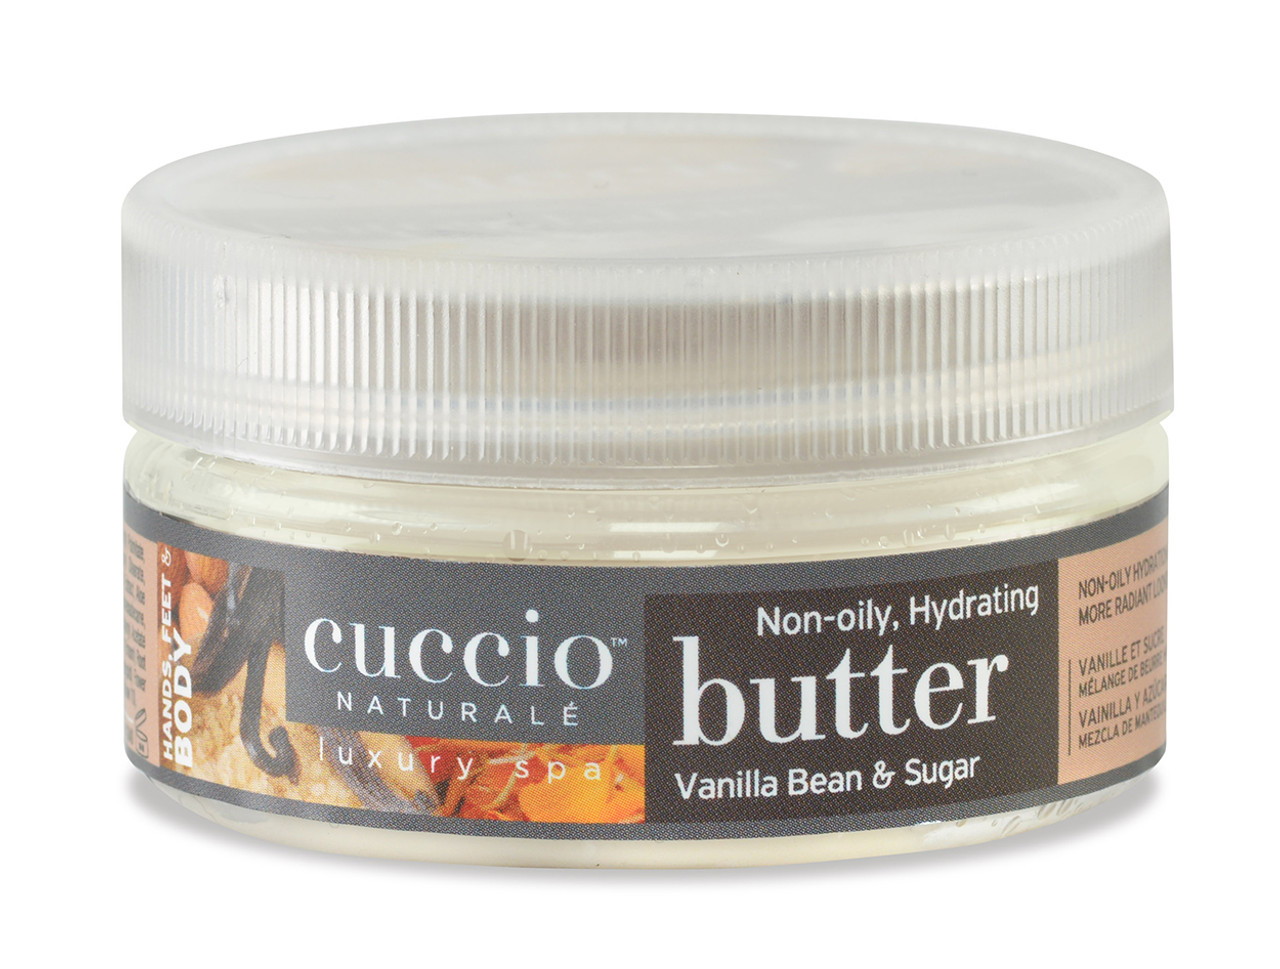 Cuccio Naturale Butter Babies Vanilla Bean And Sugar - 1.5 oz / 42 g